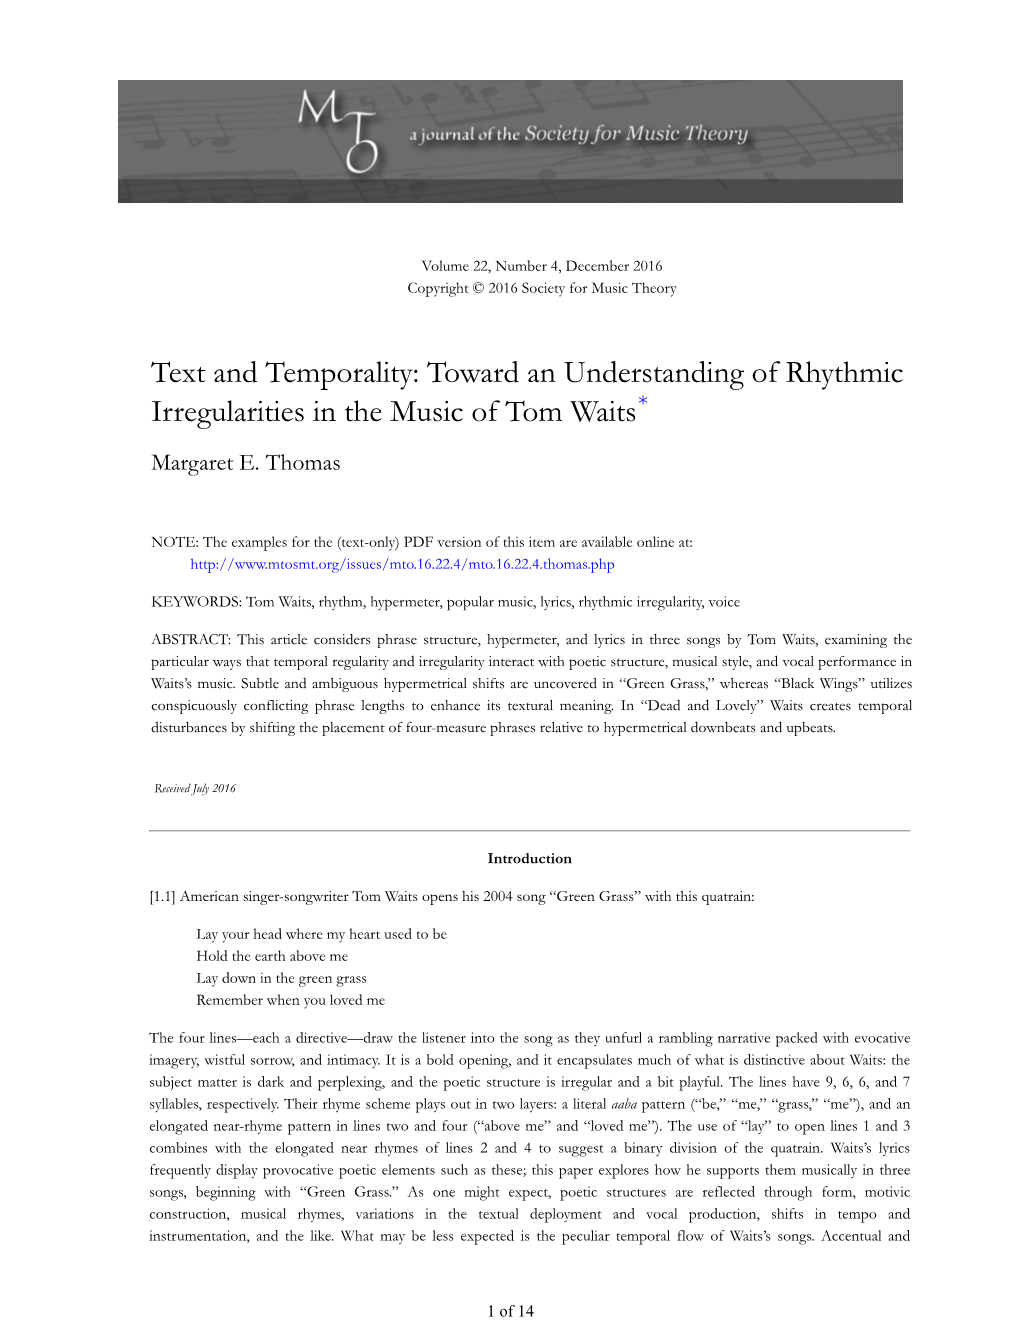 MTO 22.4: Thomas, Text and Temporality